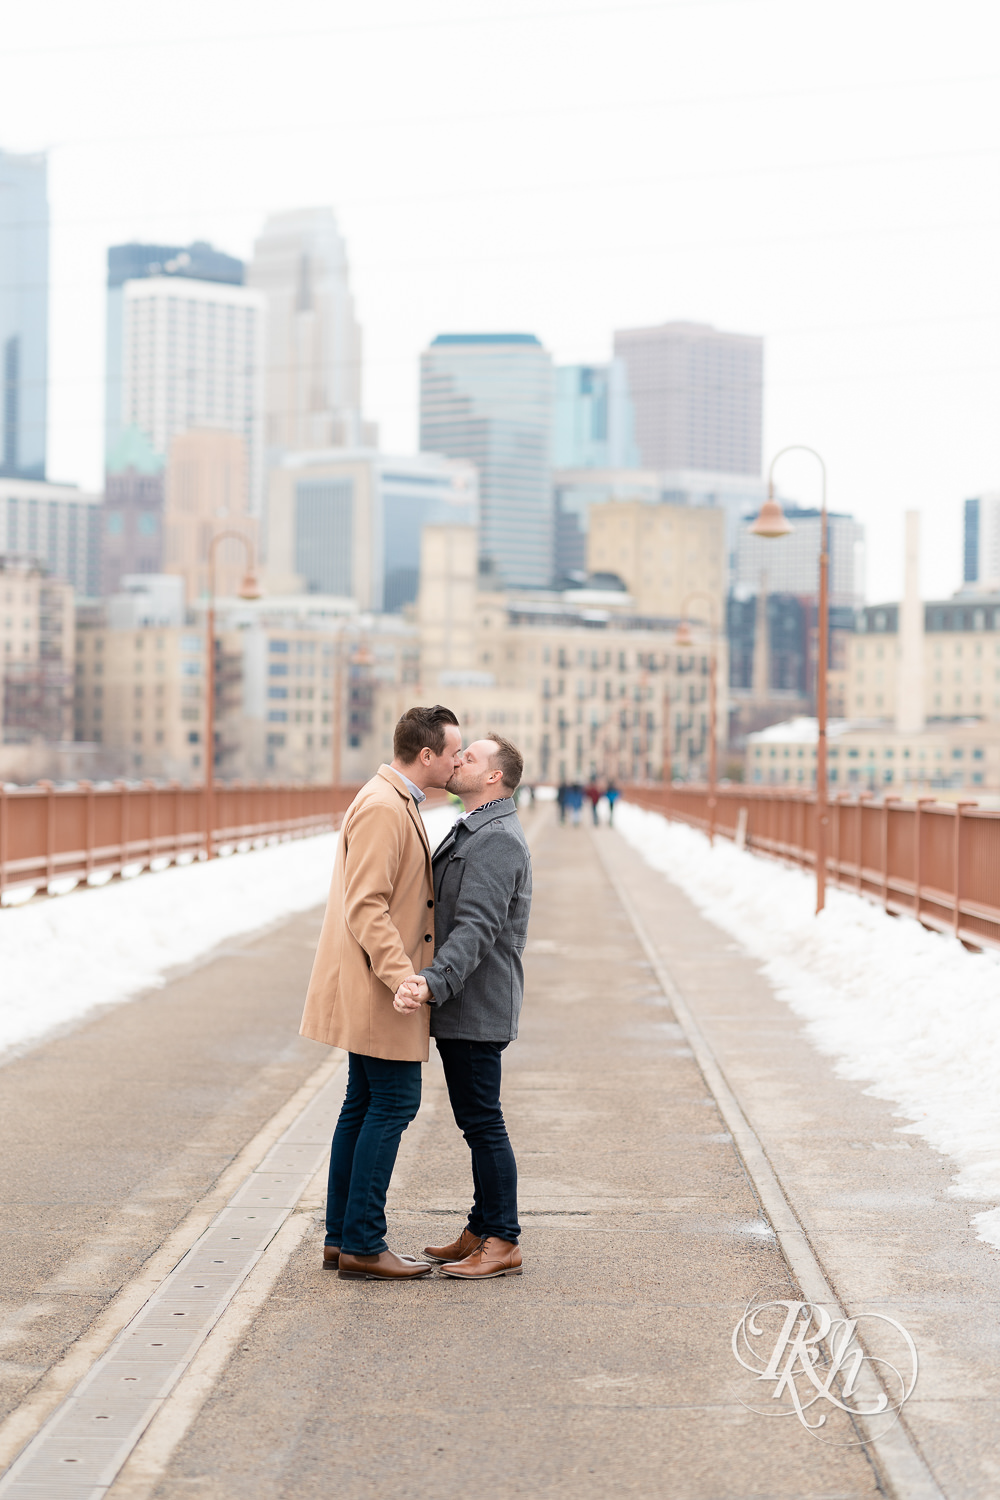 Gay men kiss on the Stone Arch Bridge during the winter in Minneapolis, Minnesota.